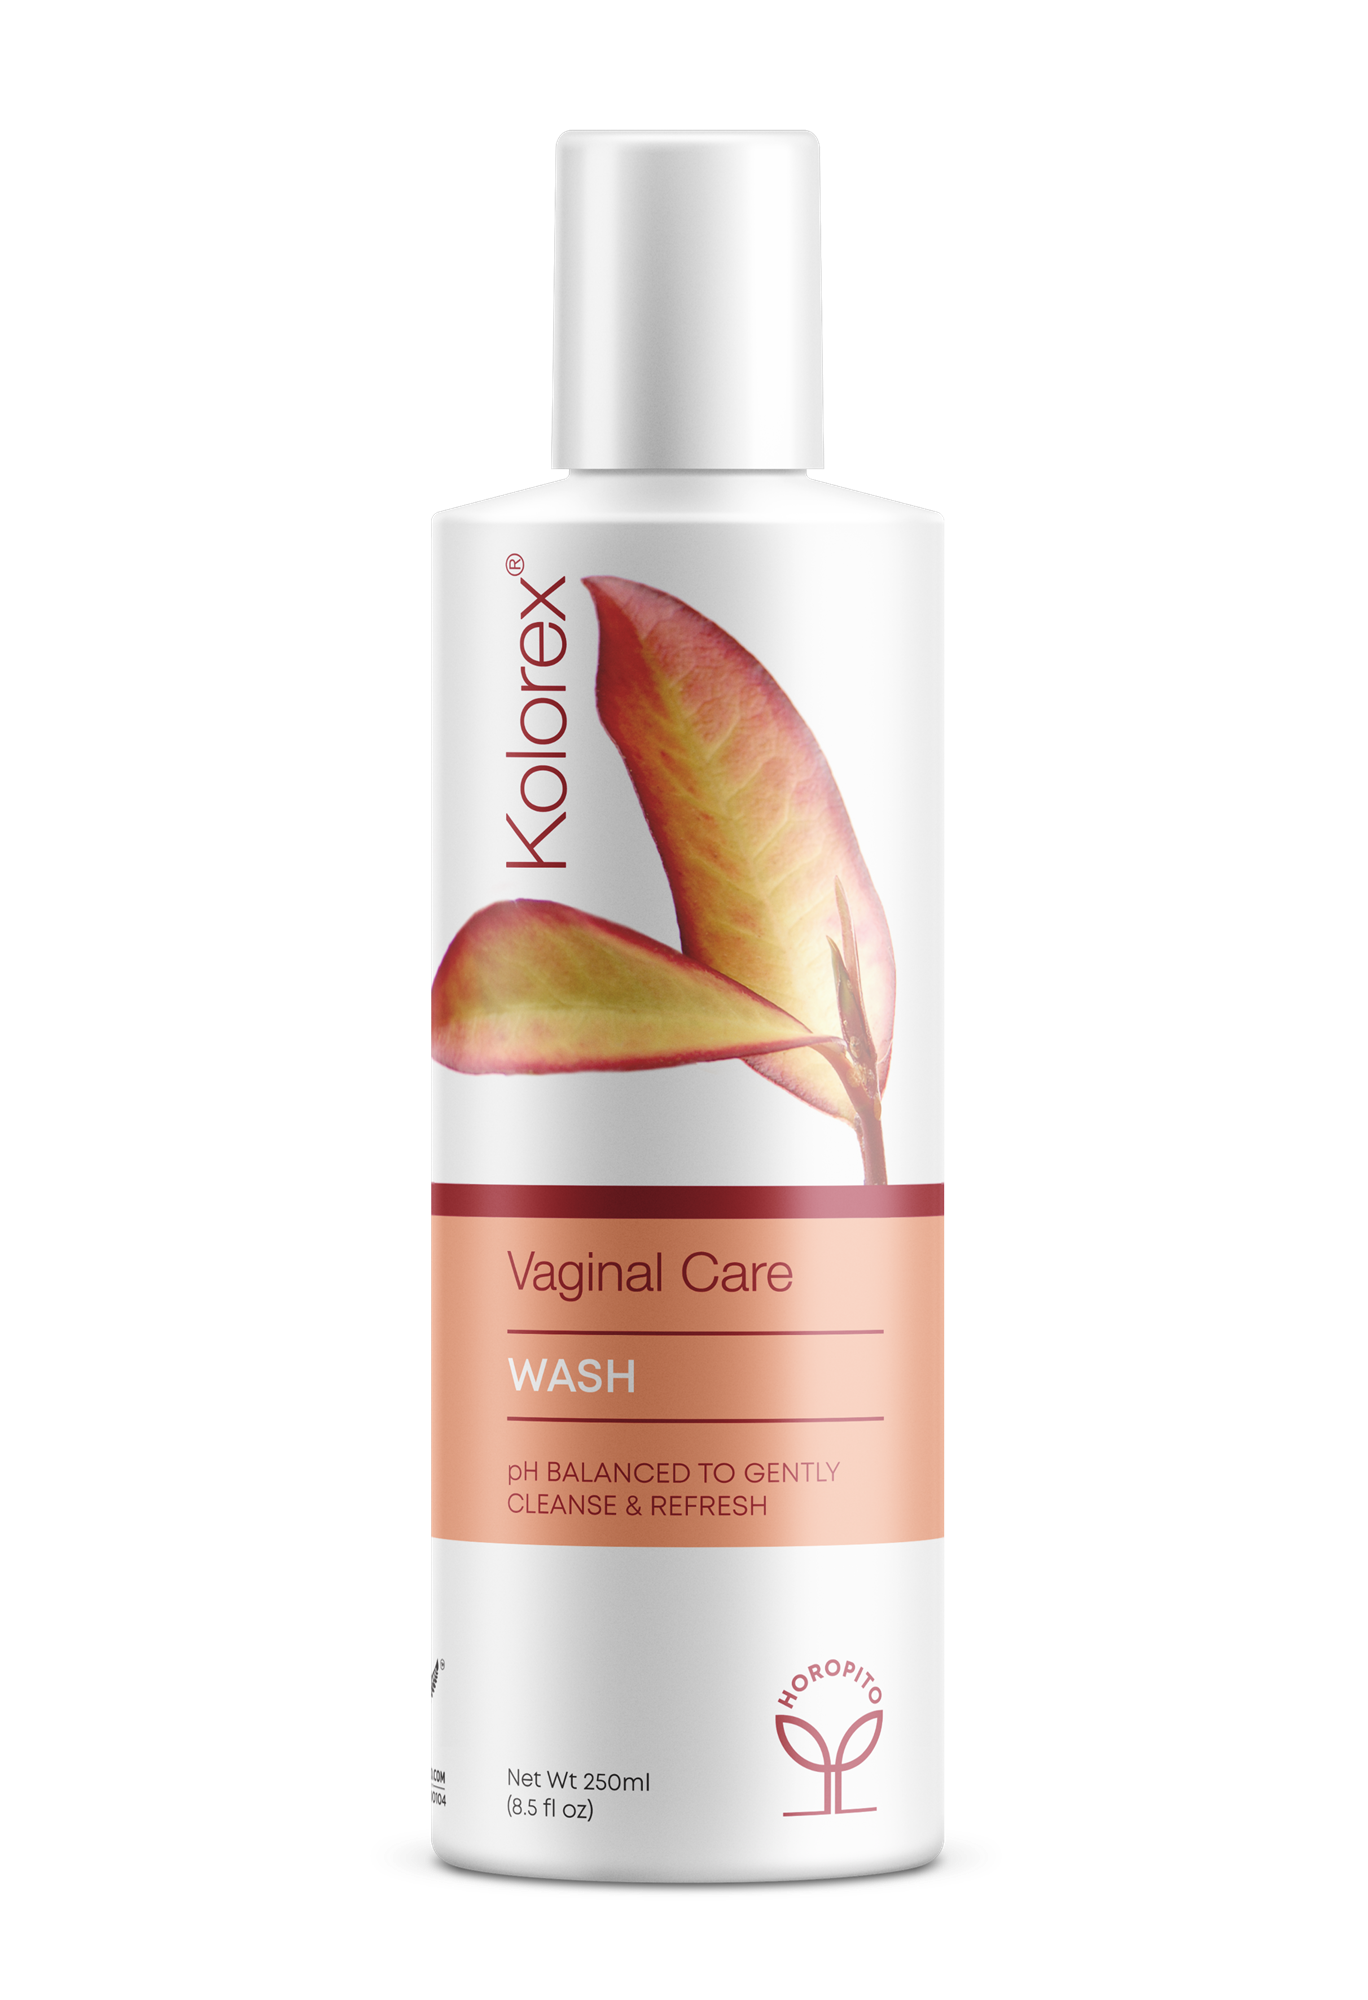 Kolorex Vaginal Care Wash 8.5 fl oz Curated Wellness